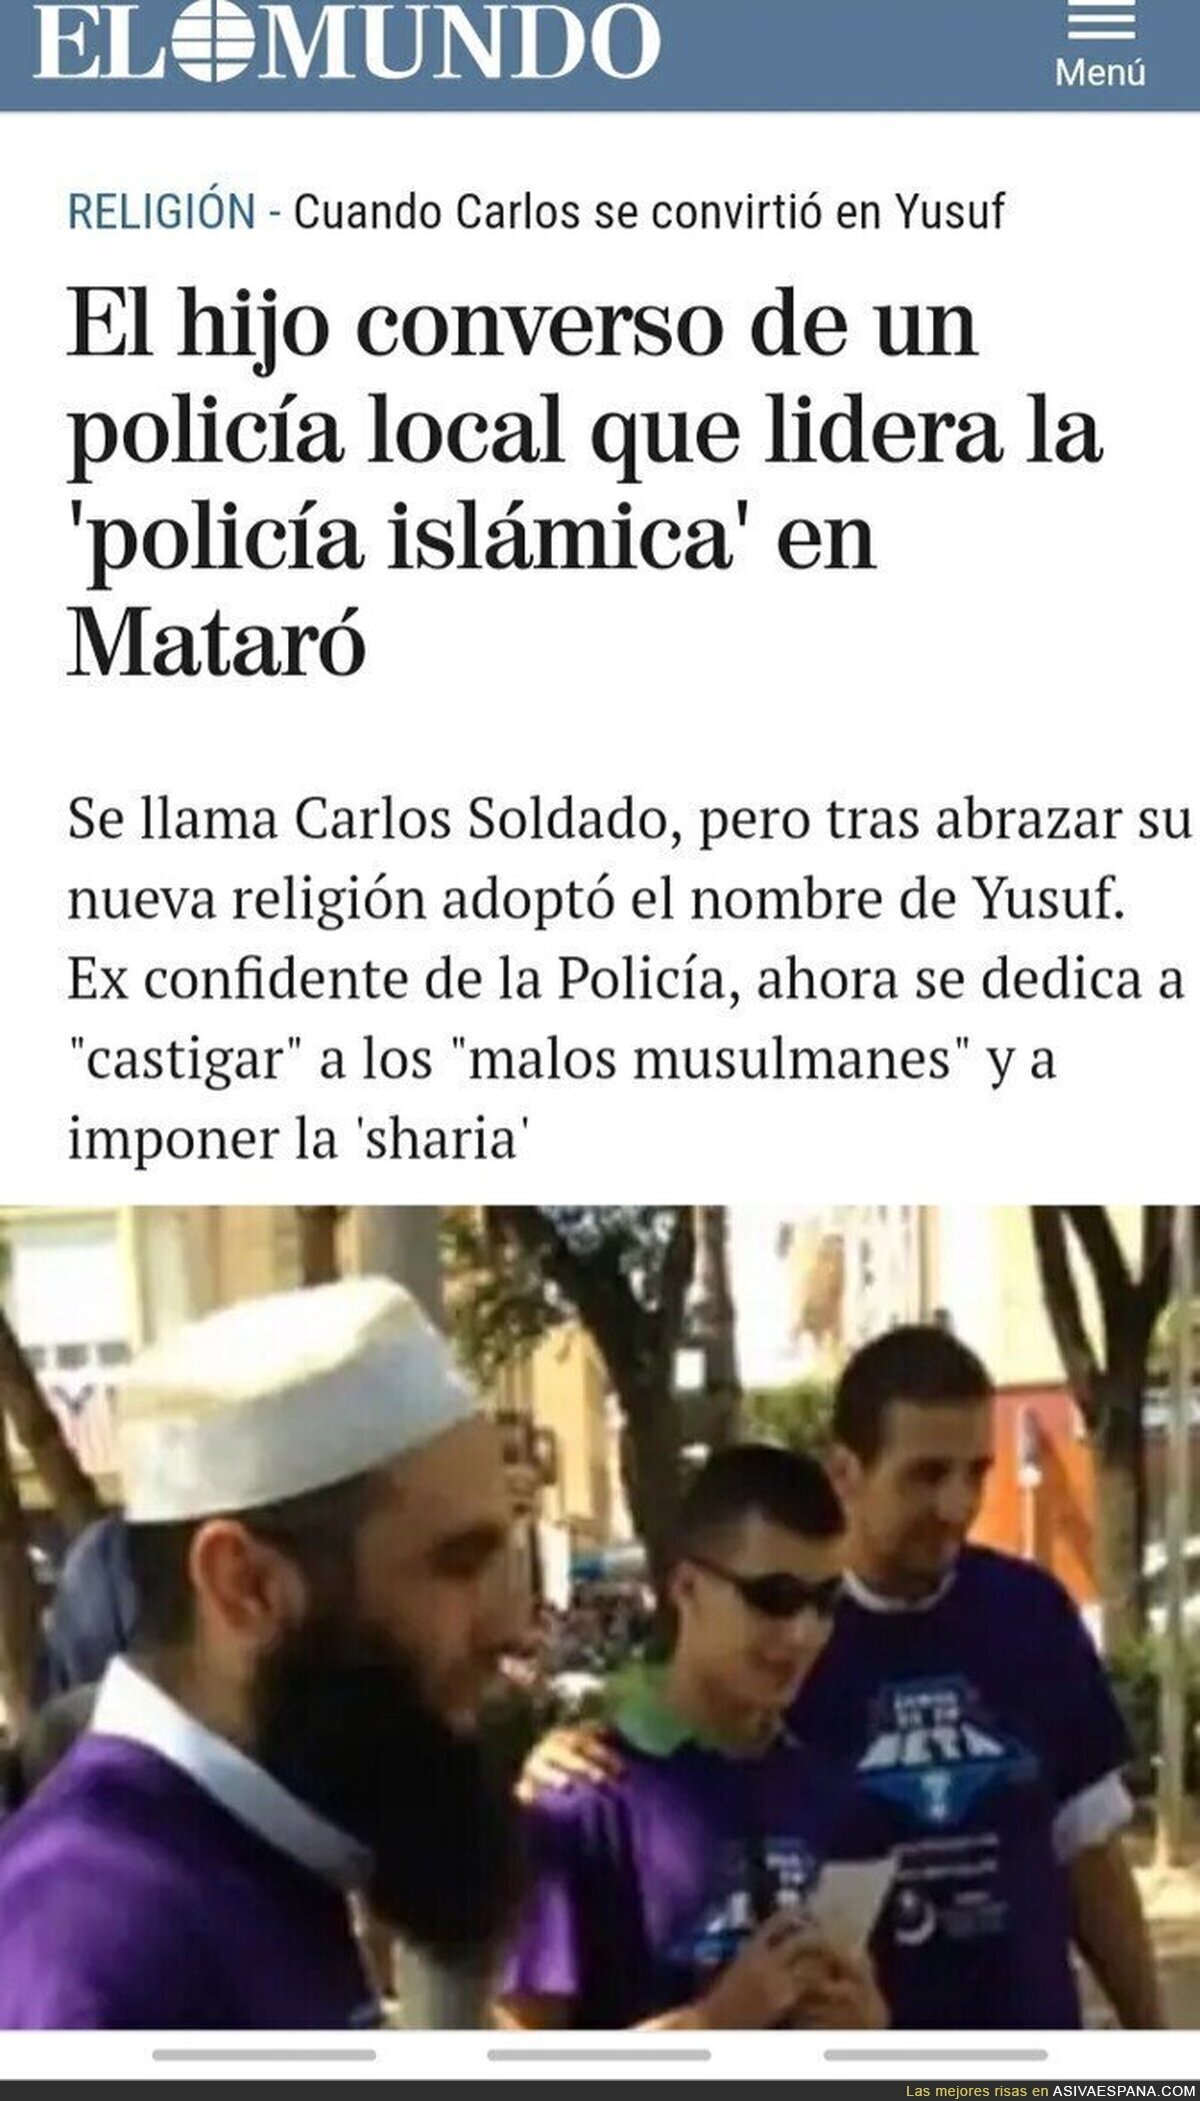 La "policía islámica" llega a España